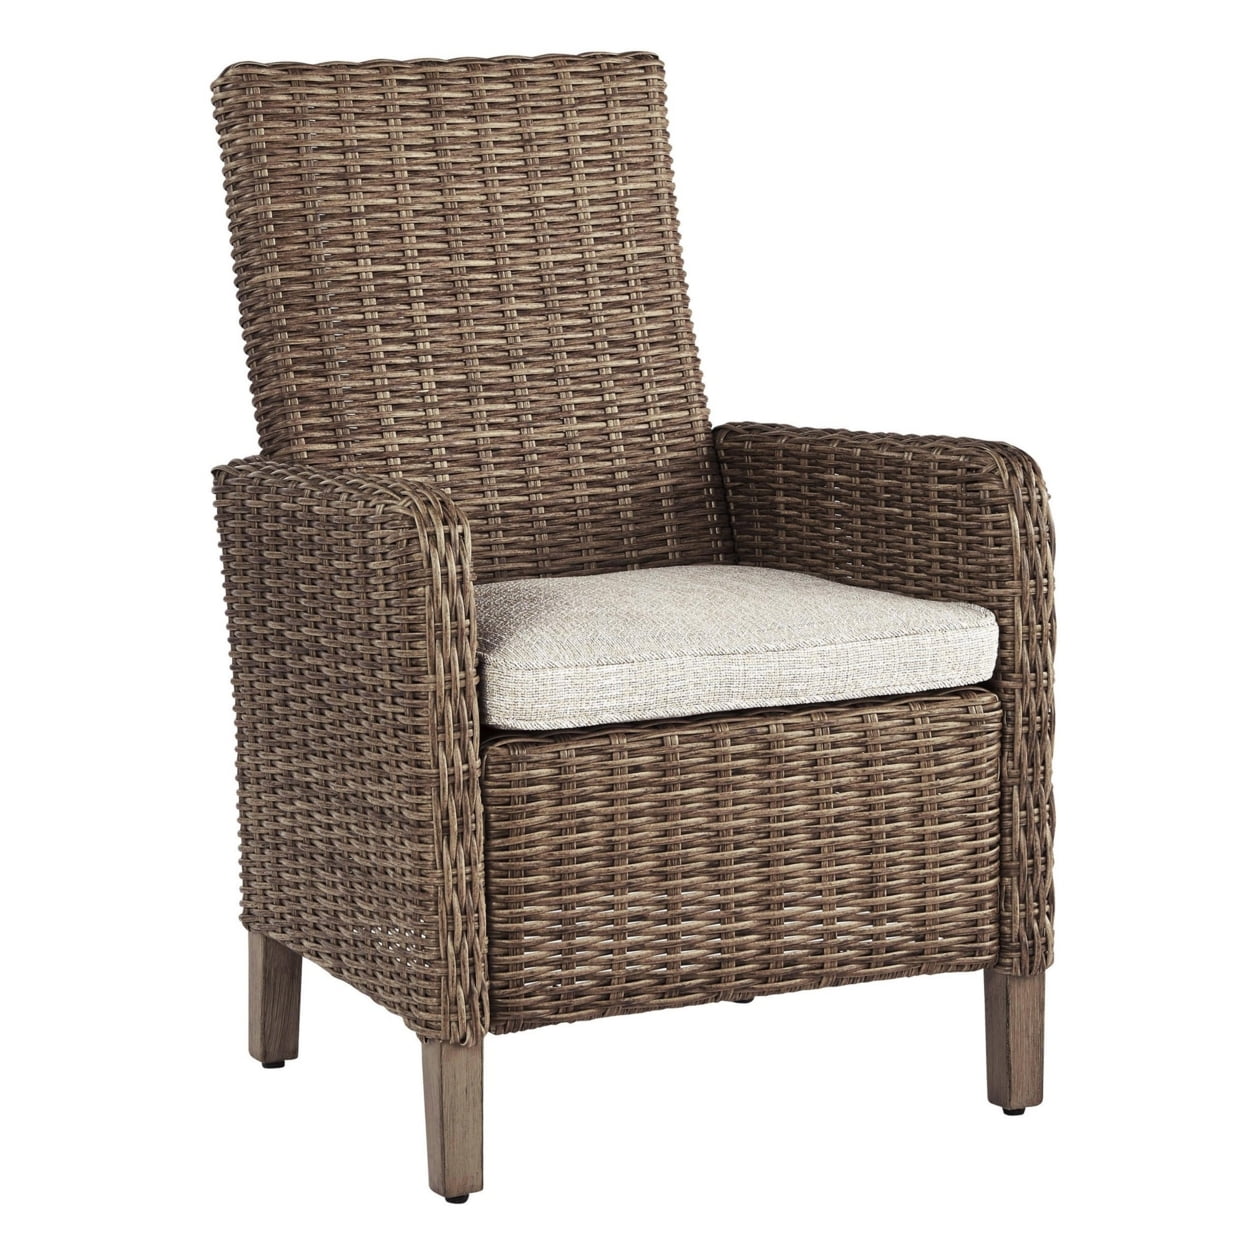 Picture of Benjara BM213315 Handwoven Wicker Frame Fabric Upholstered Armchair - Beige & Brown - 40 x 26 x 25 in. - Set of 2